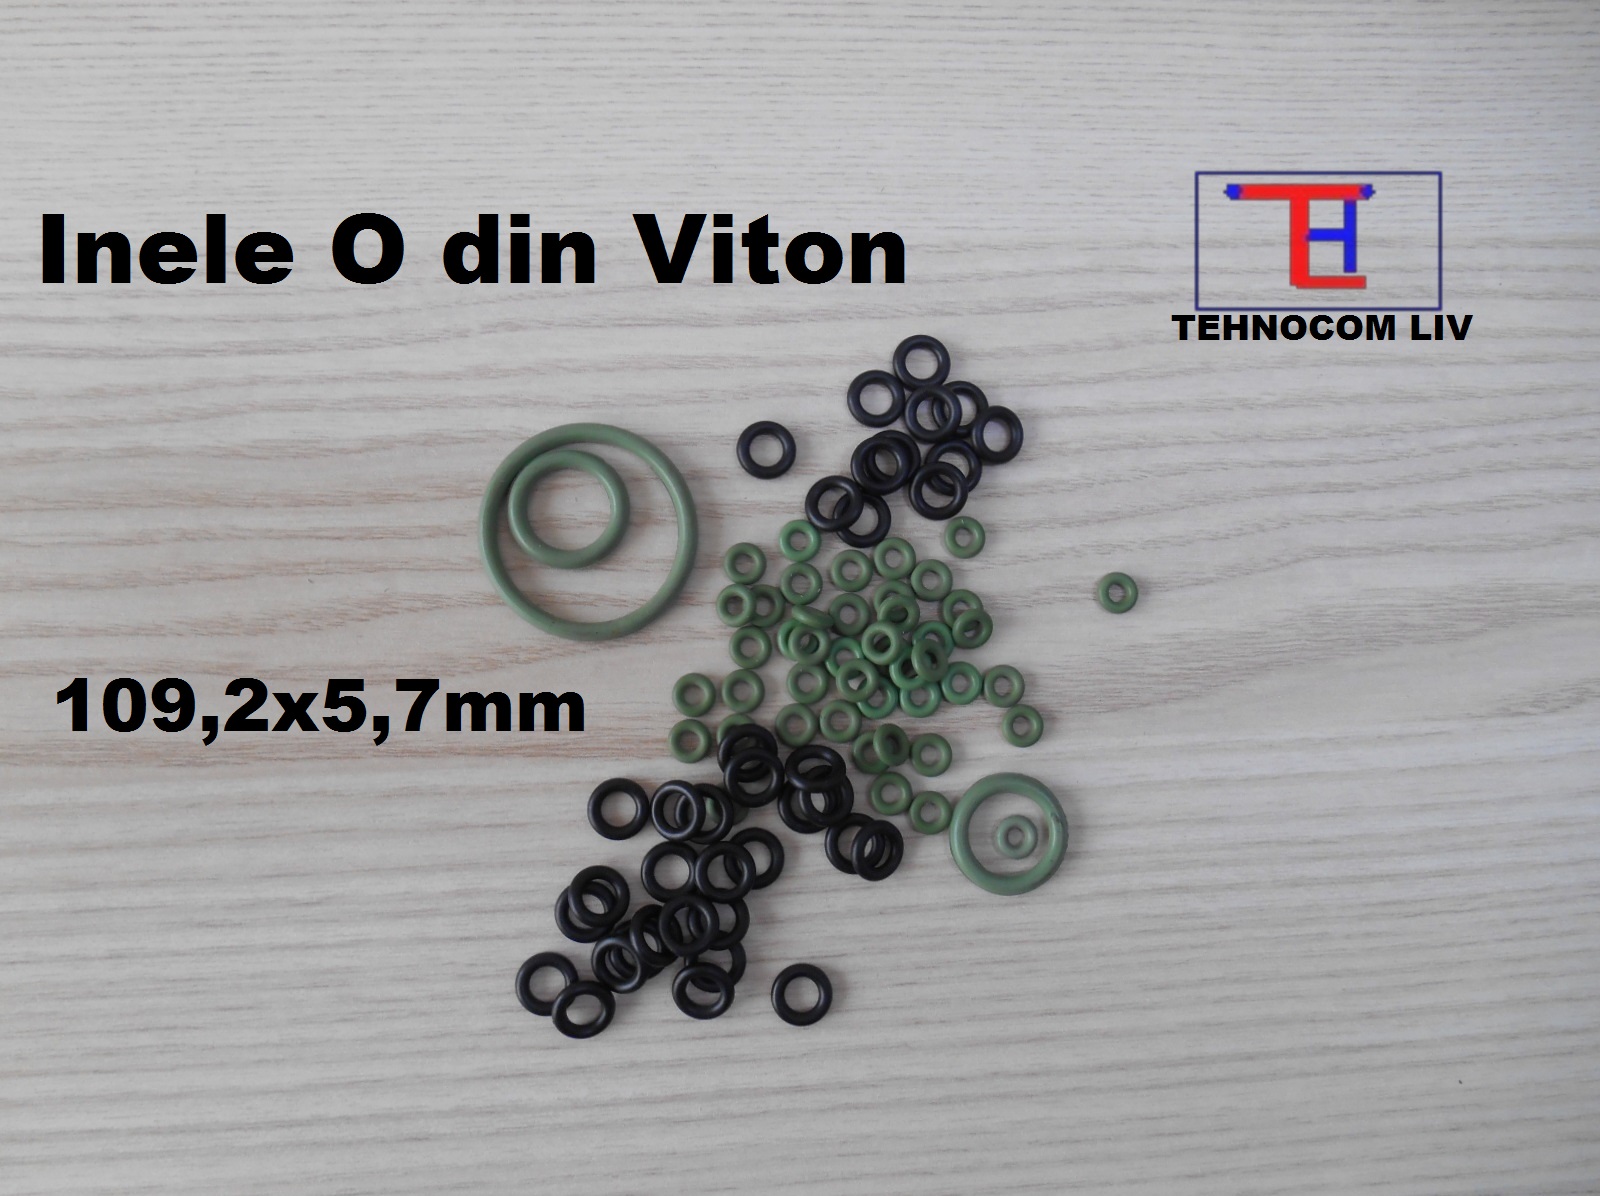 Inele O din Viton70 FPM 109.2x5.7mm